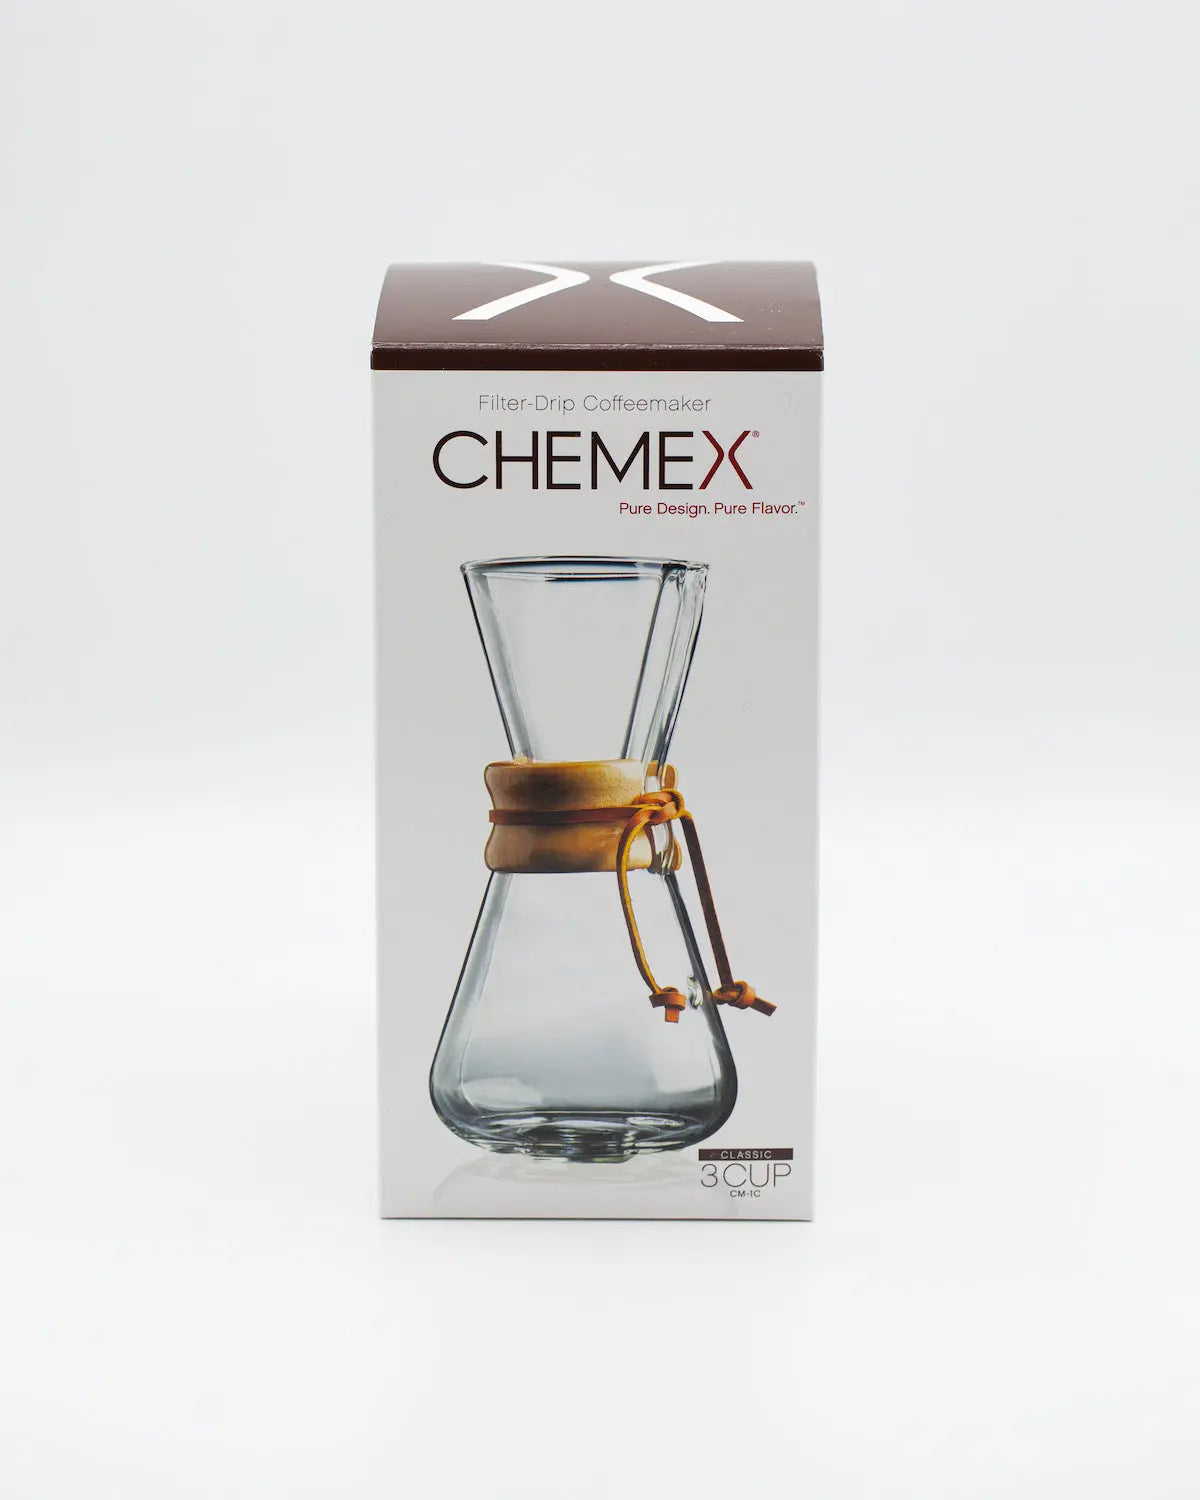 Chemex – Parlor Coffee